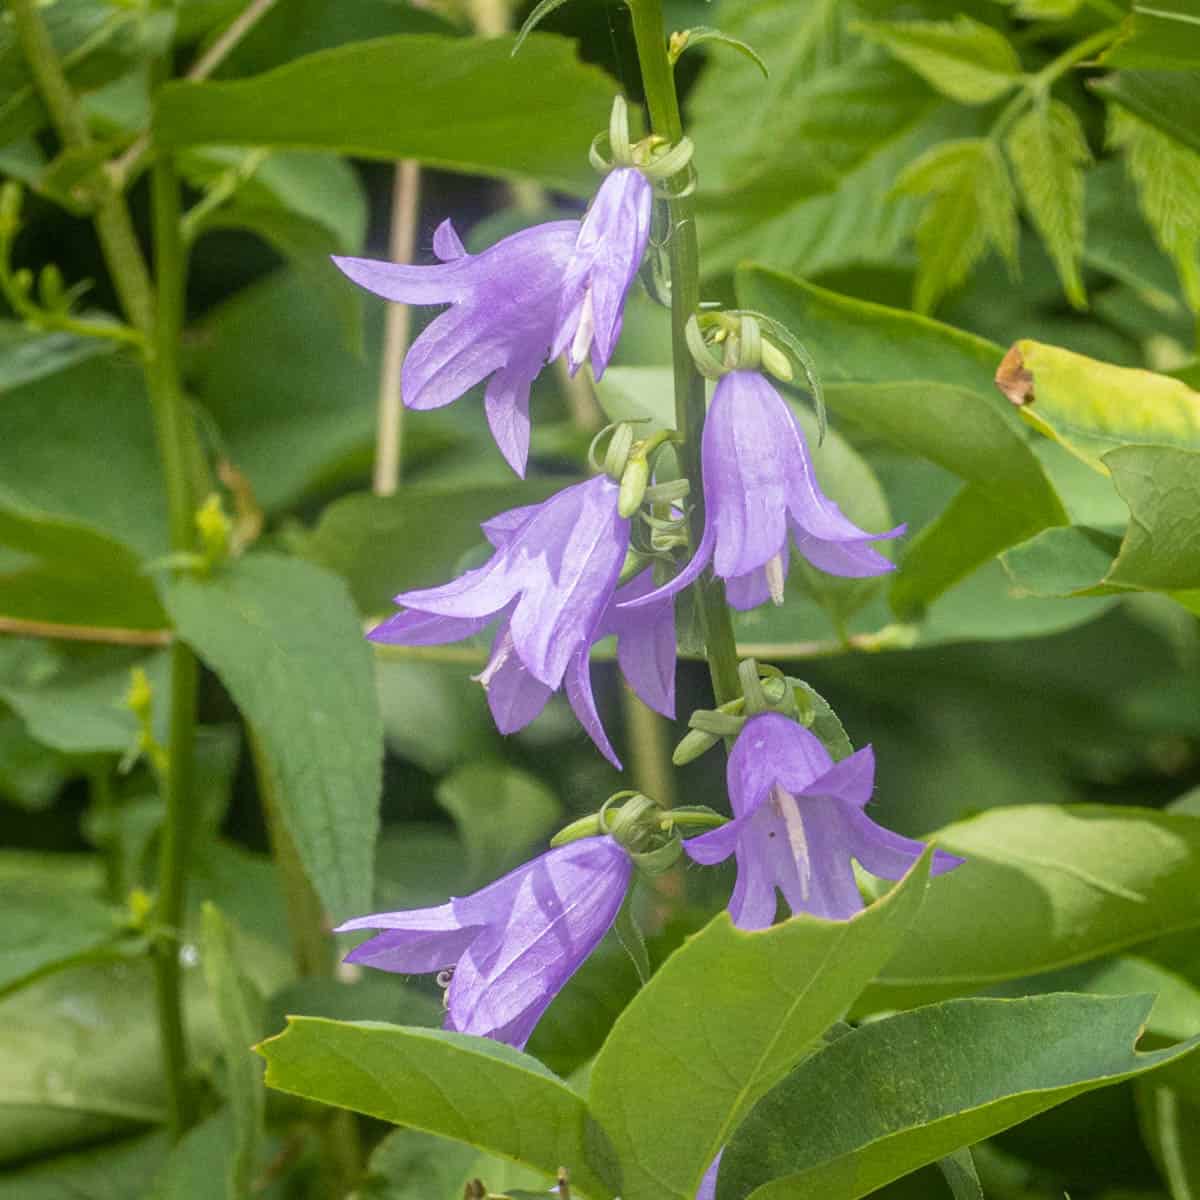 Edible Campanula rapunculoides or creeping bellflower flowers